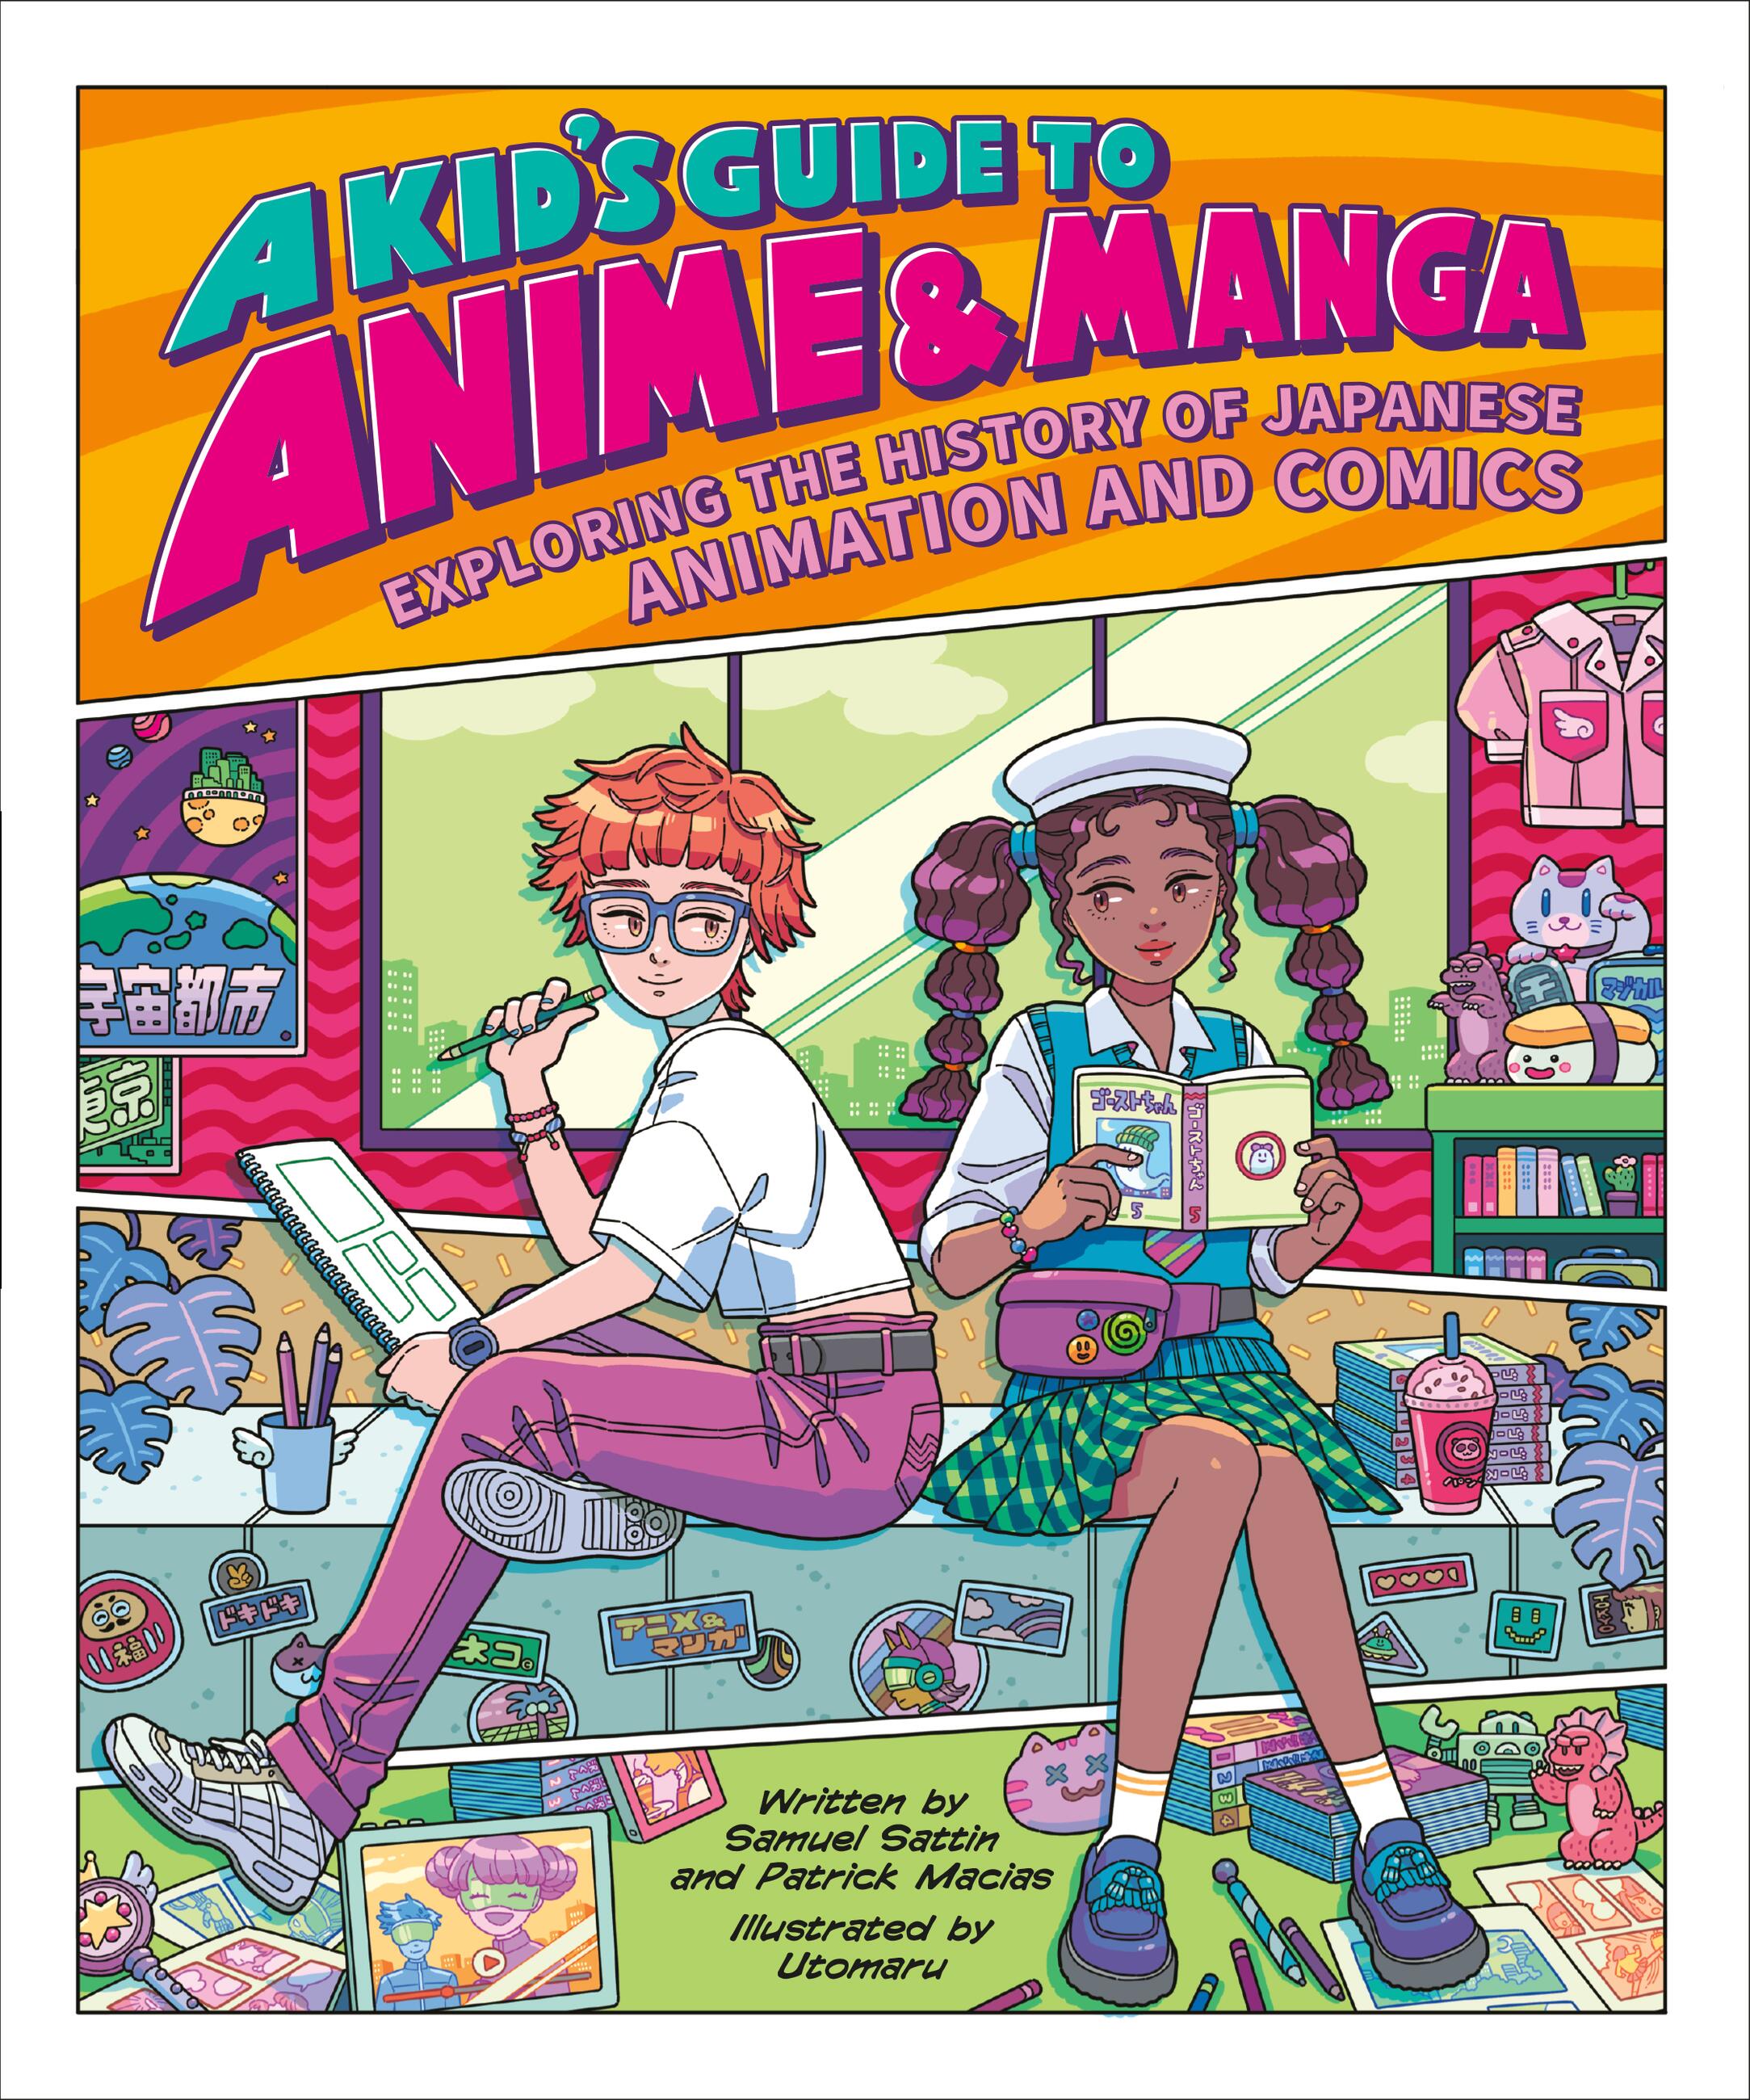 A Kid's Guide to Anime & Manga by Samuel Sattin